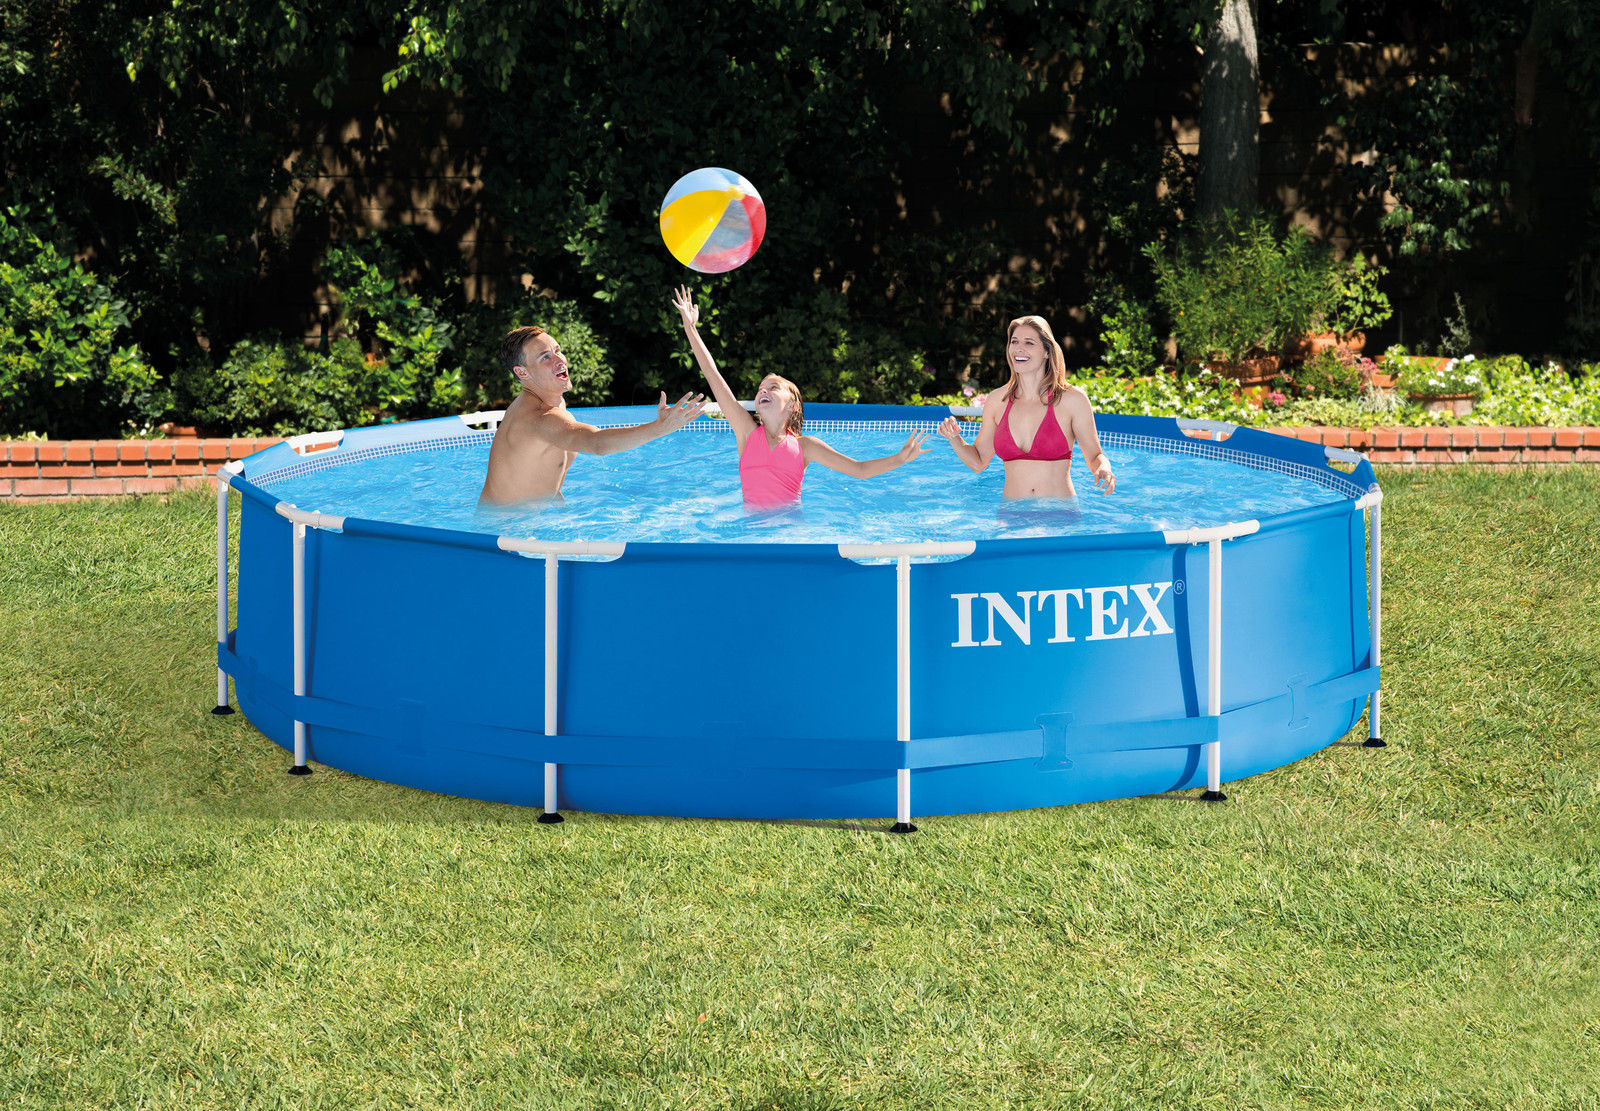 Intex 12ft X 30in Metal Frame Pool Set Only $76.49!